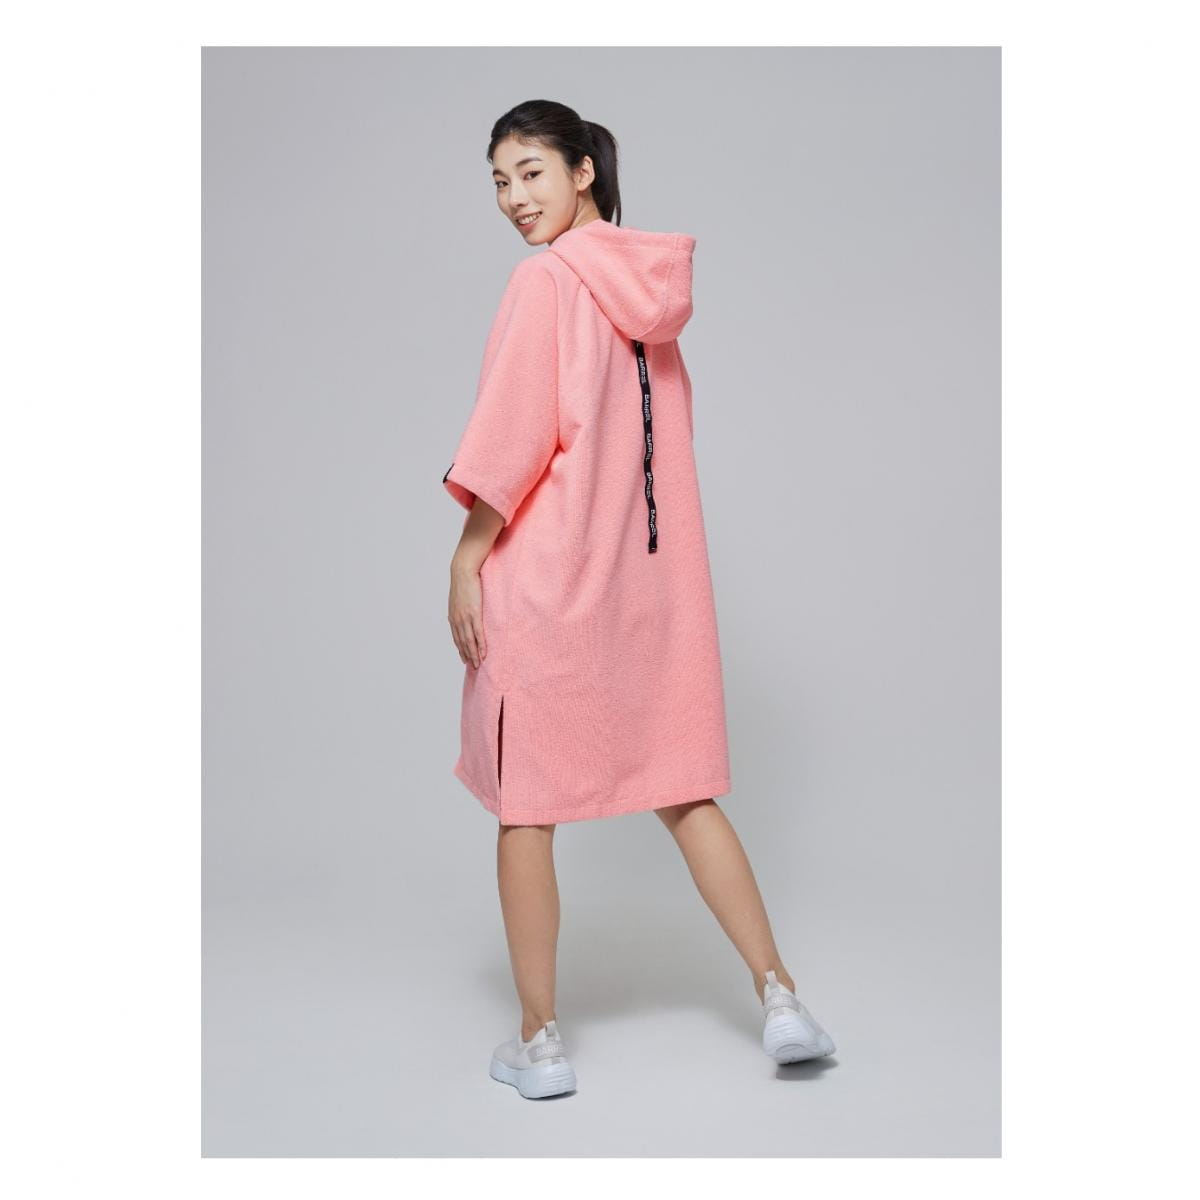 【BARREL】BASIC ZIP-UP PONCHO TOWEL 單色毛巾衣 #CORAL 3